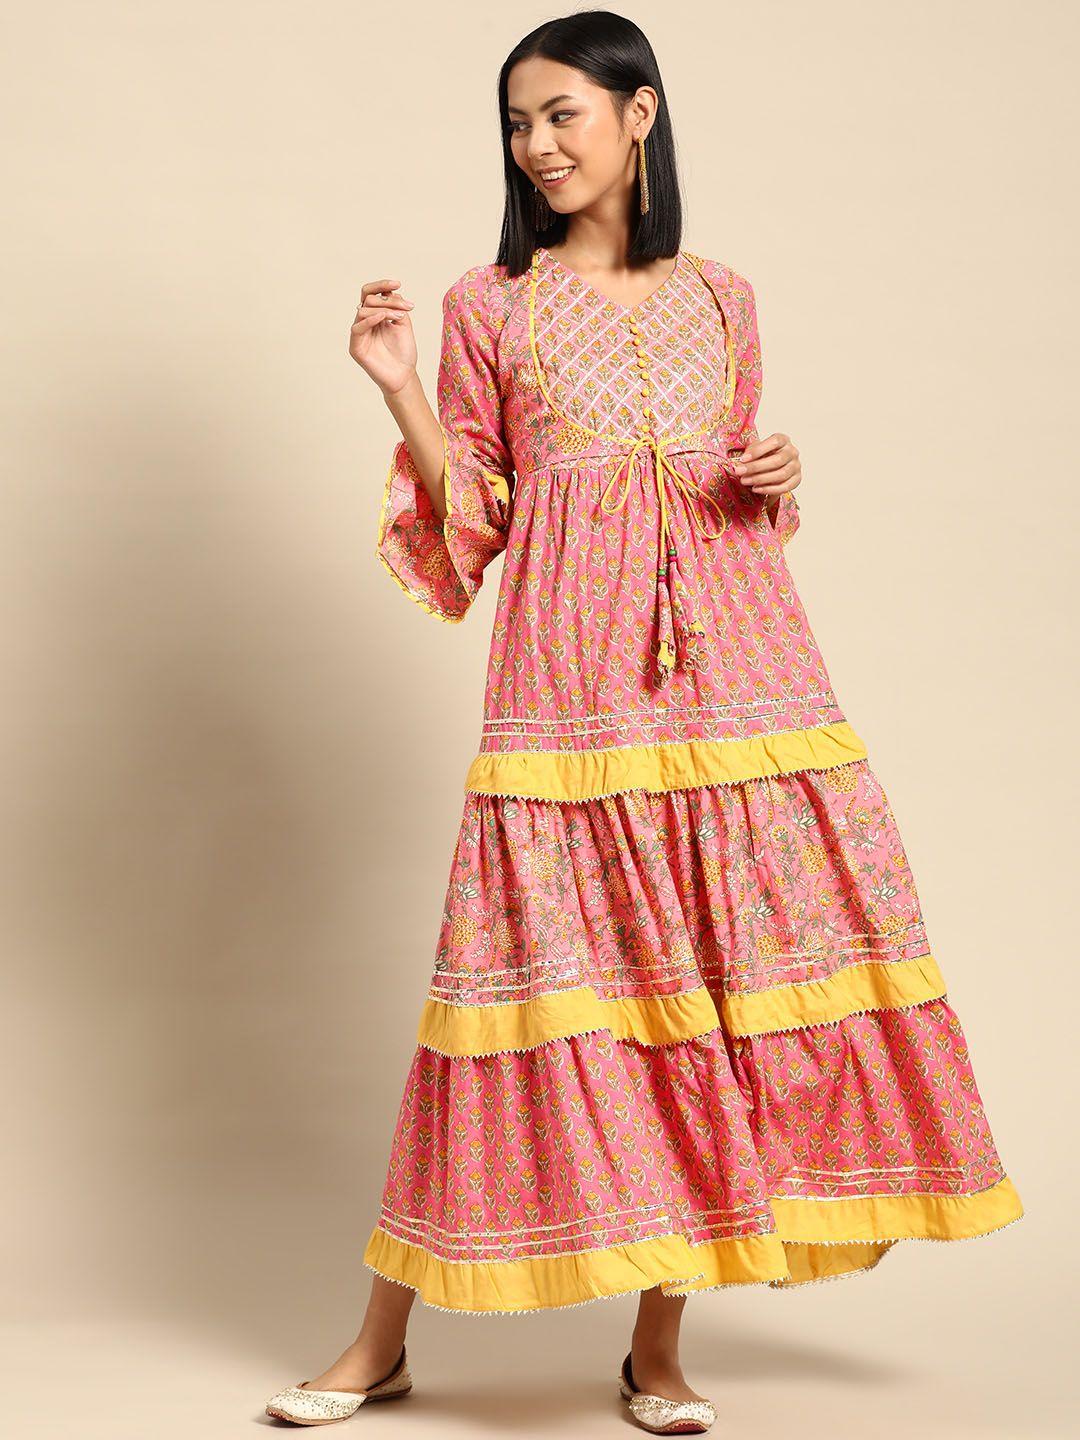 rangmayee pink & yellow floral ethnic a-line cotton maxi dress